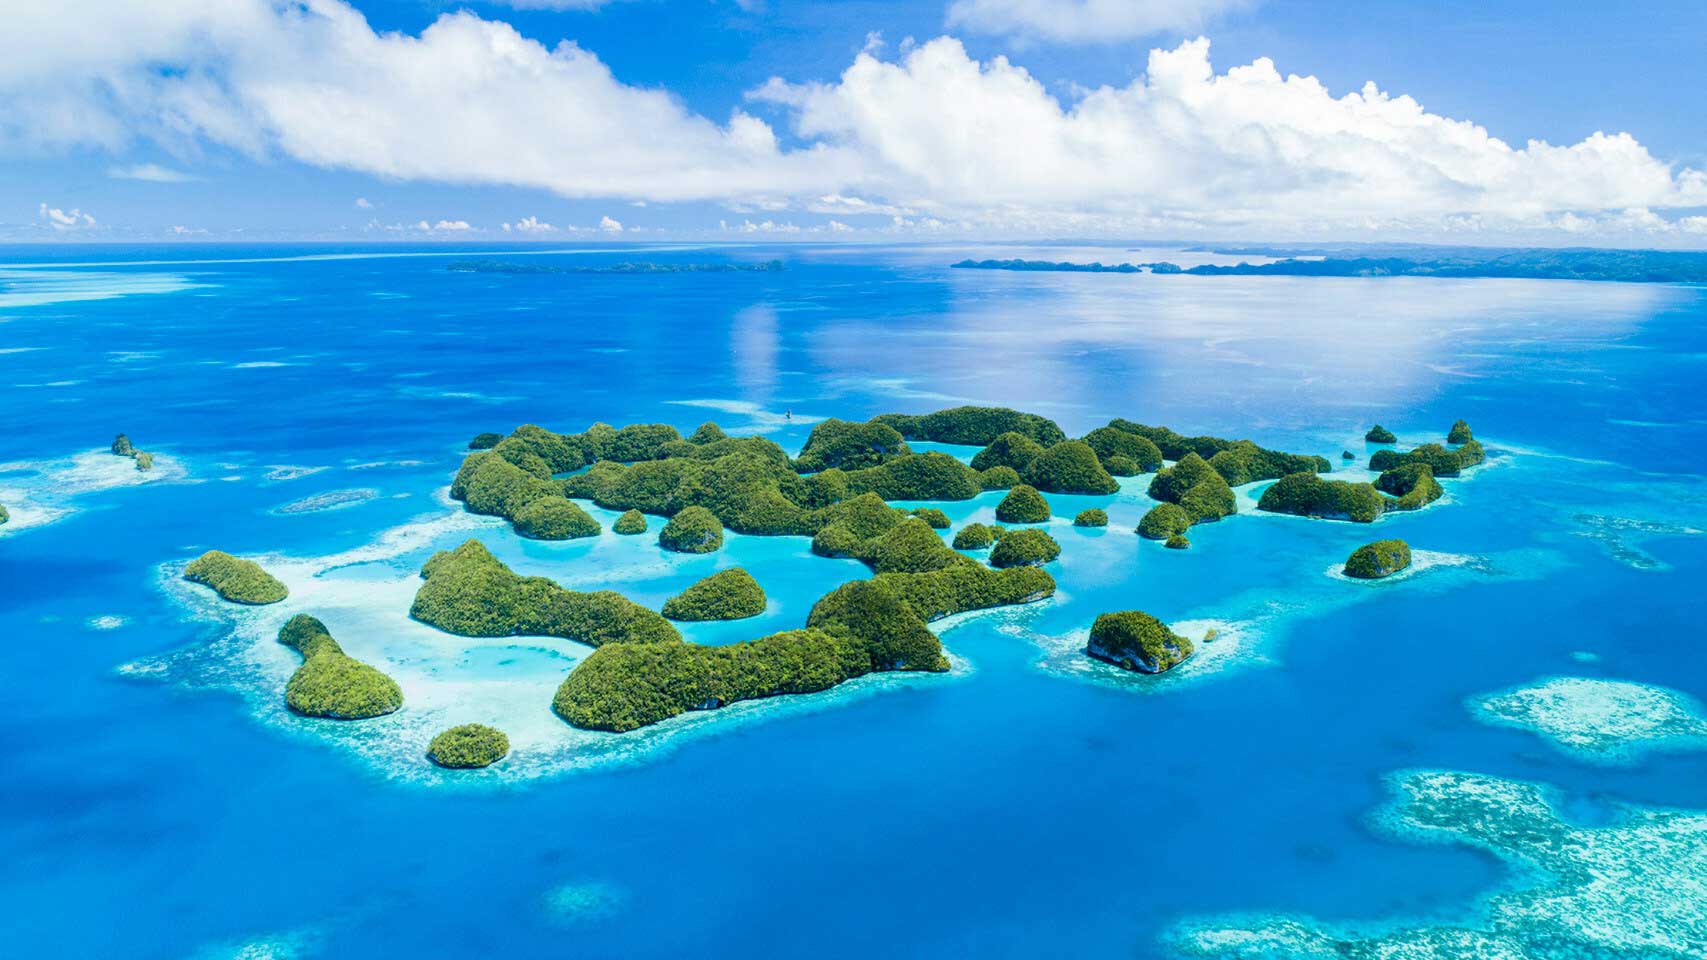 The islands of Palau